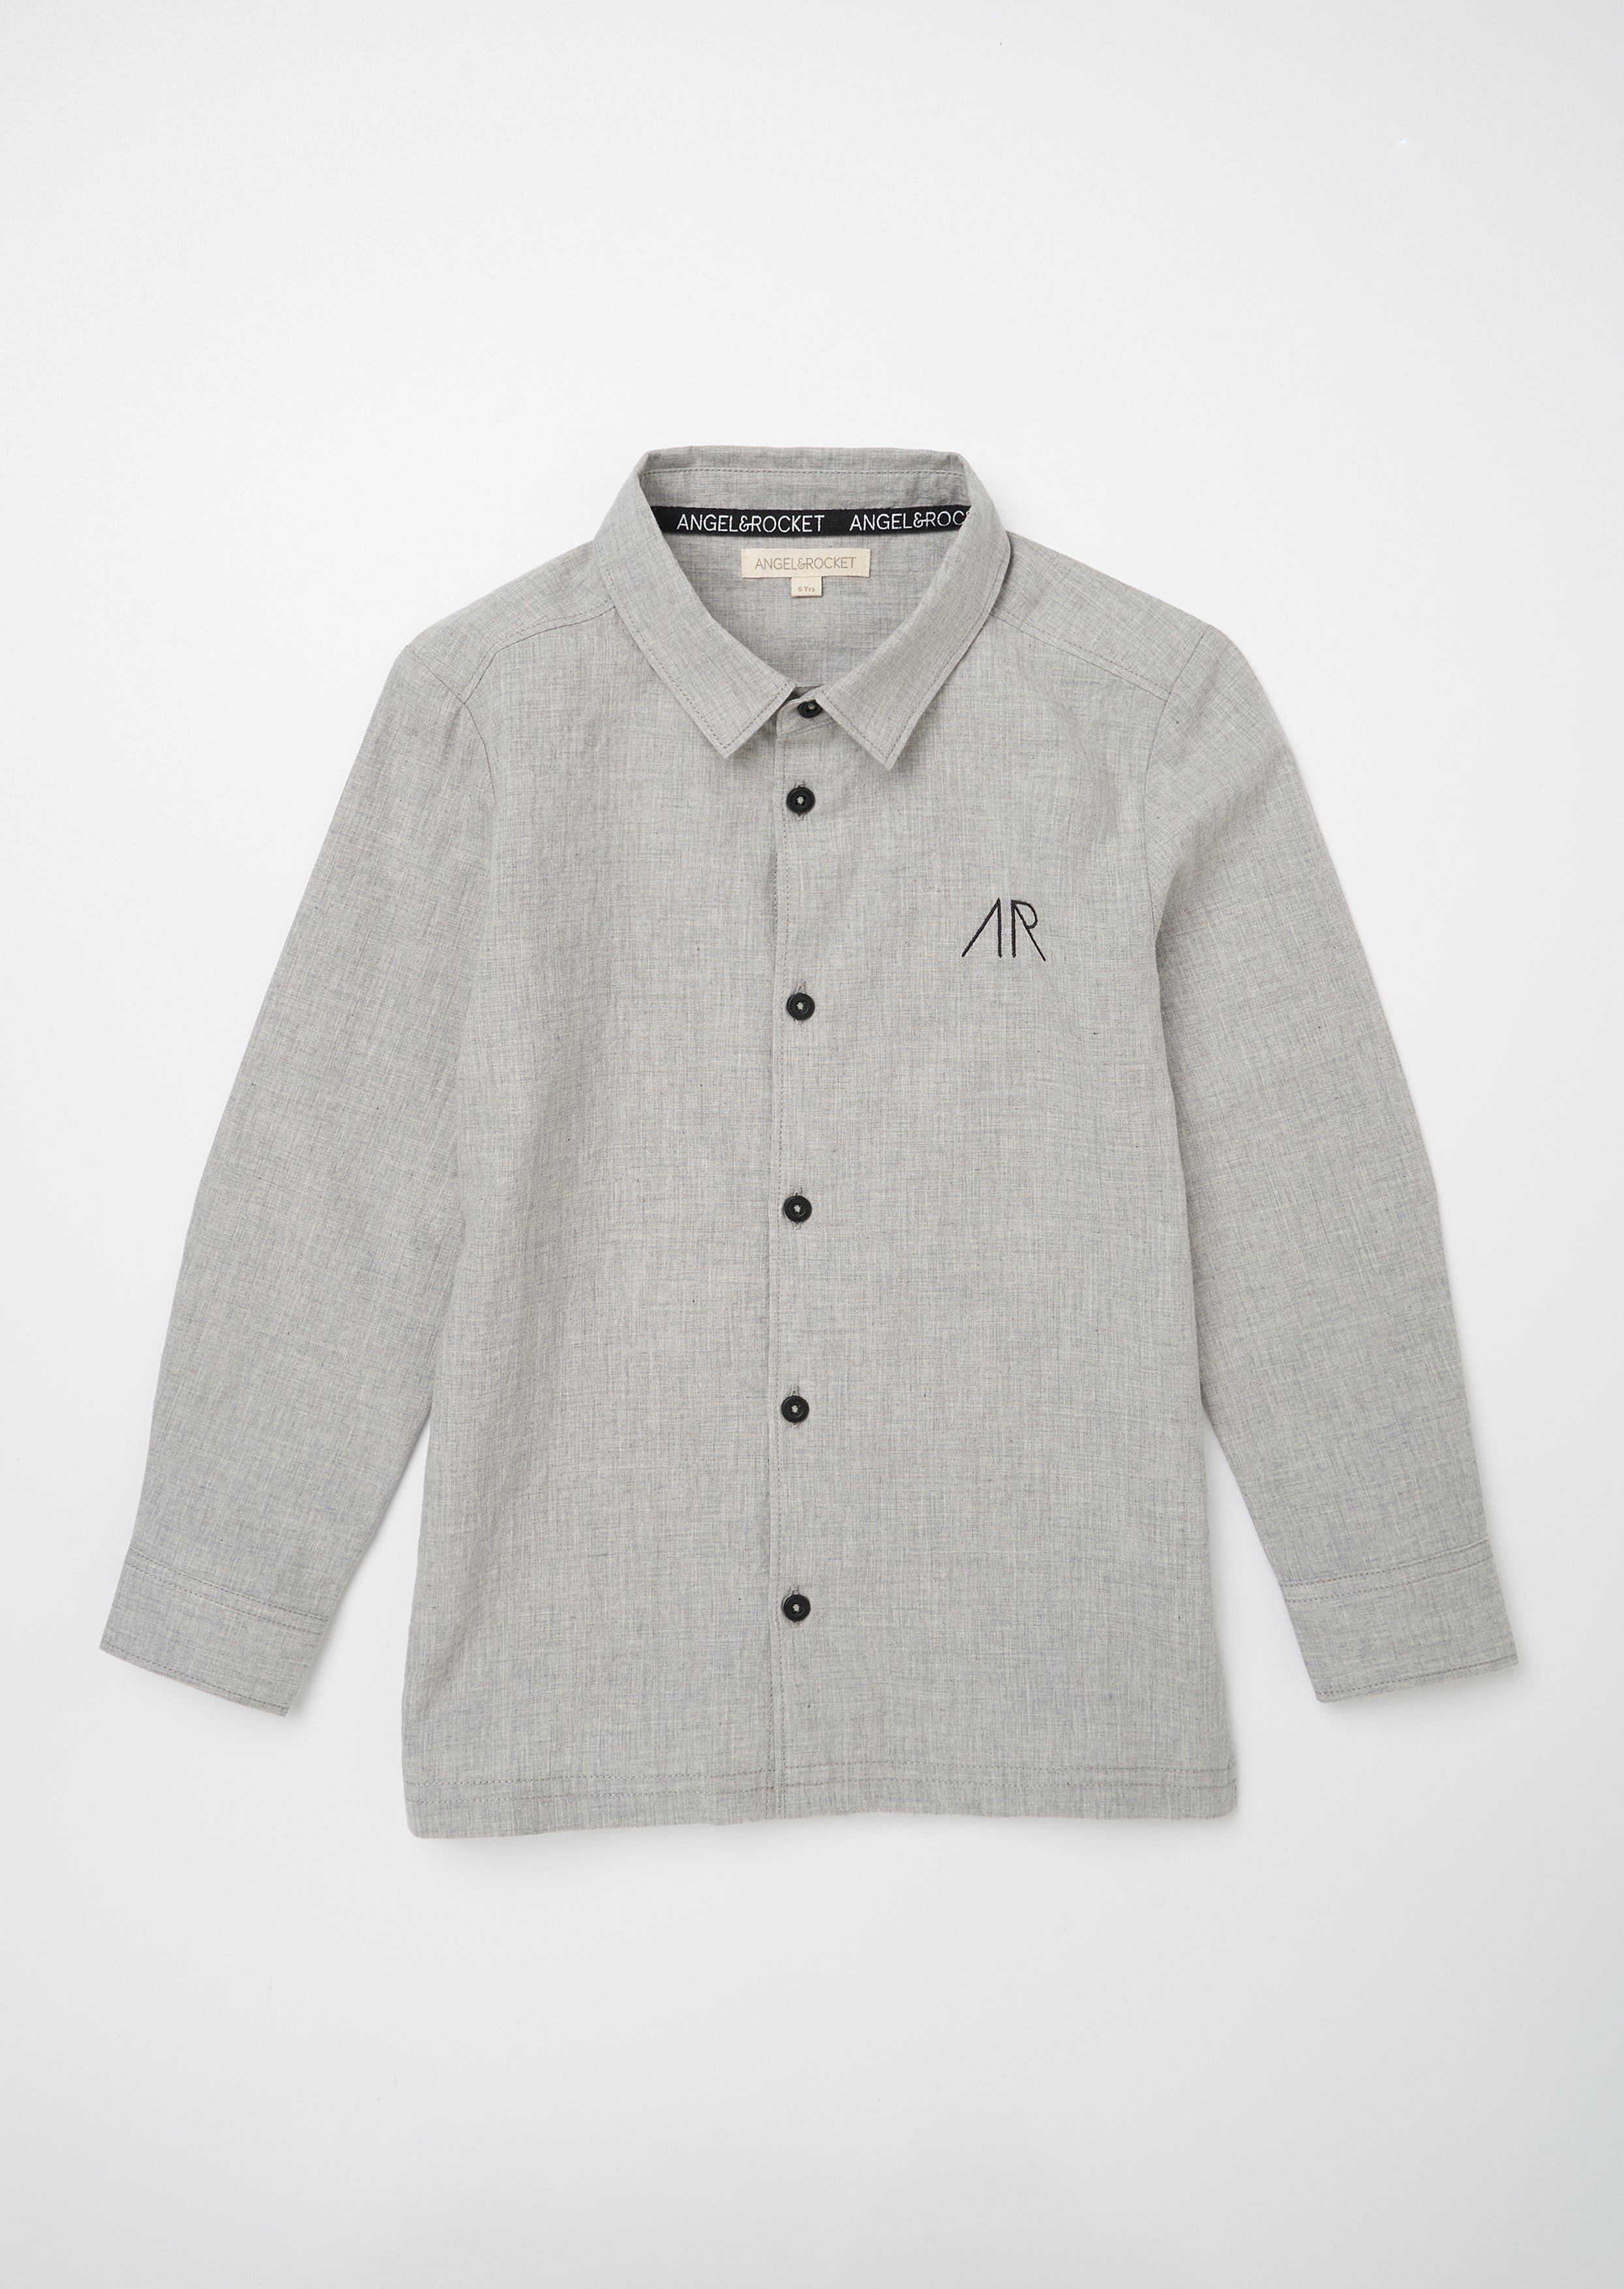 Boys Cotton Grey Full Sleeves Smart Shirt